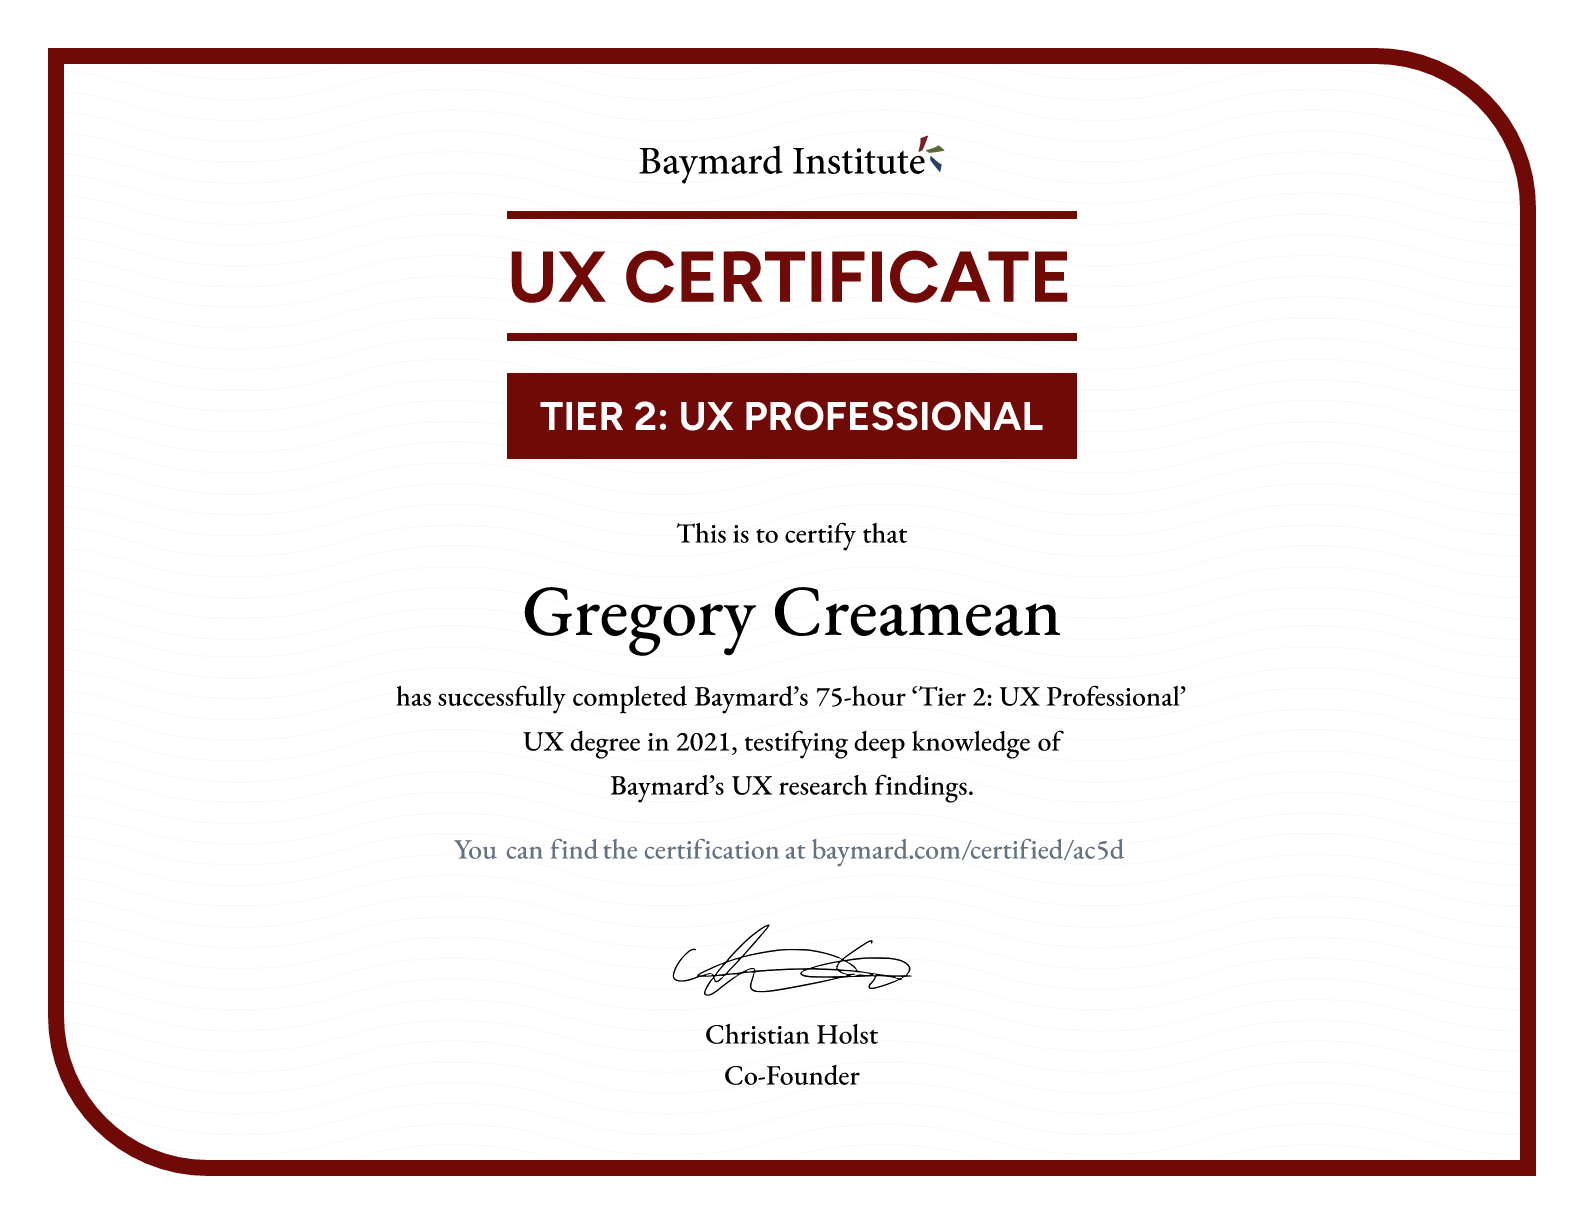 Gregory Creamean’s certificate